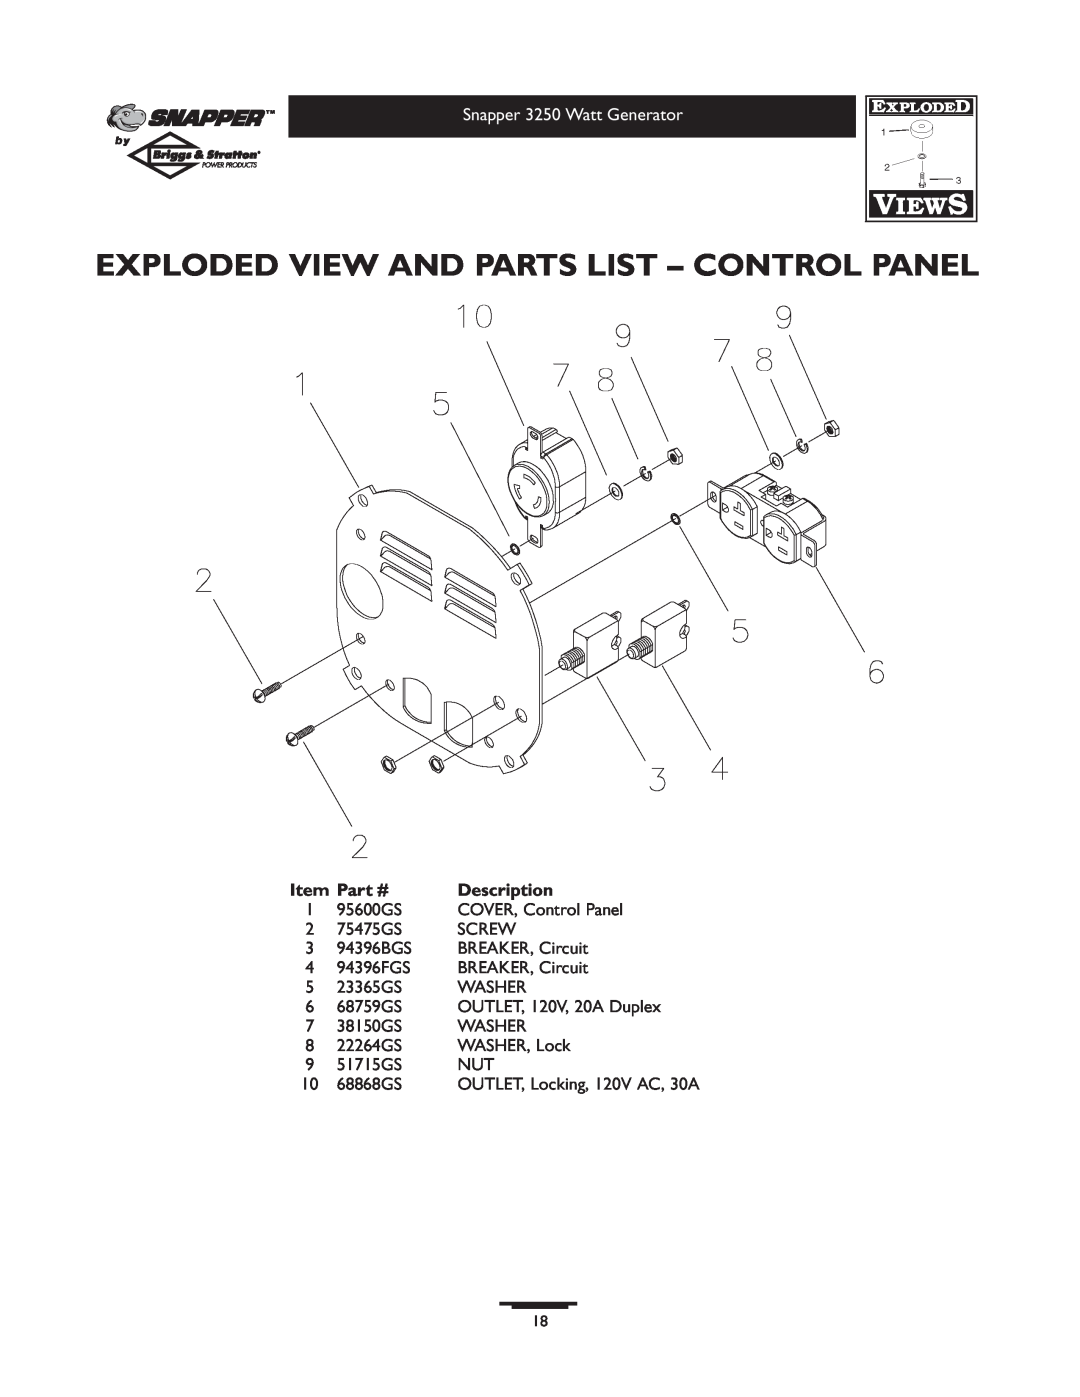 Snapper owner manual Exploded View And Parts List - Control Panel, Snapper 3250 Watt Generator, Description 